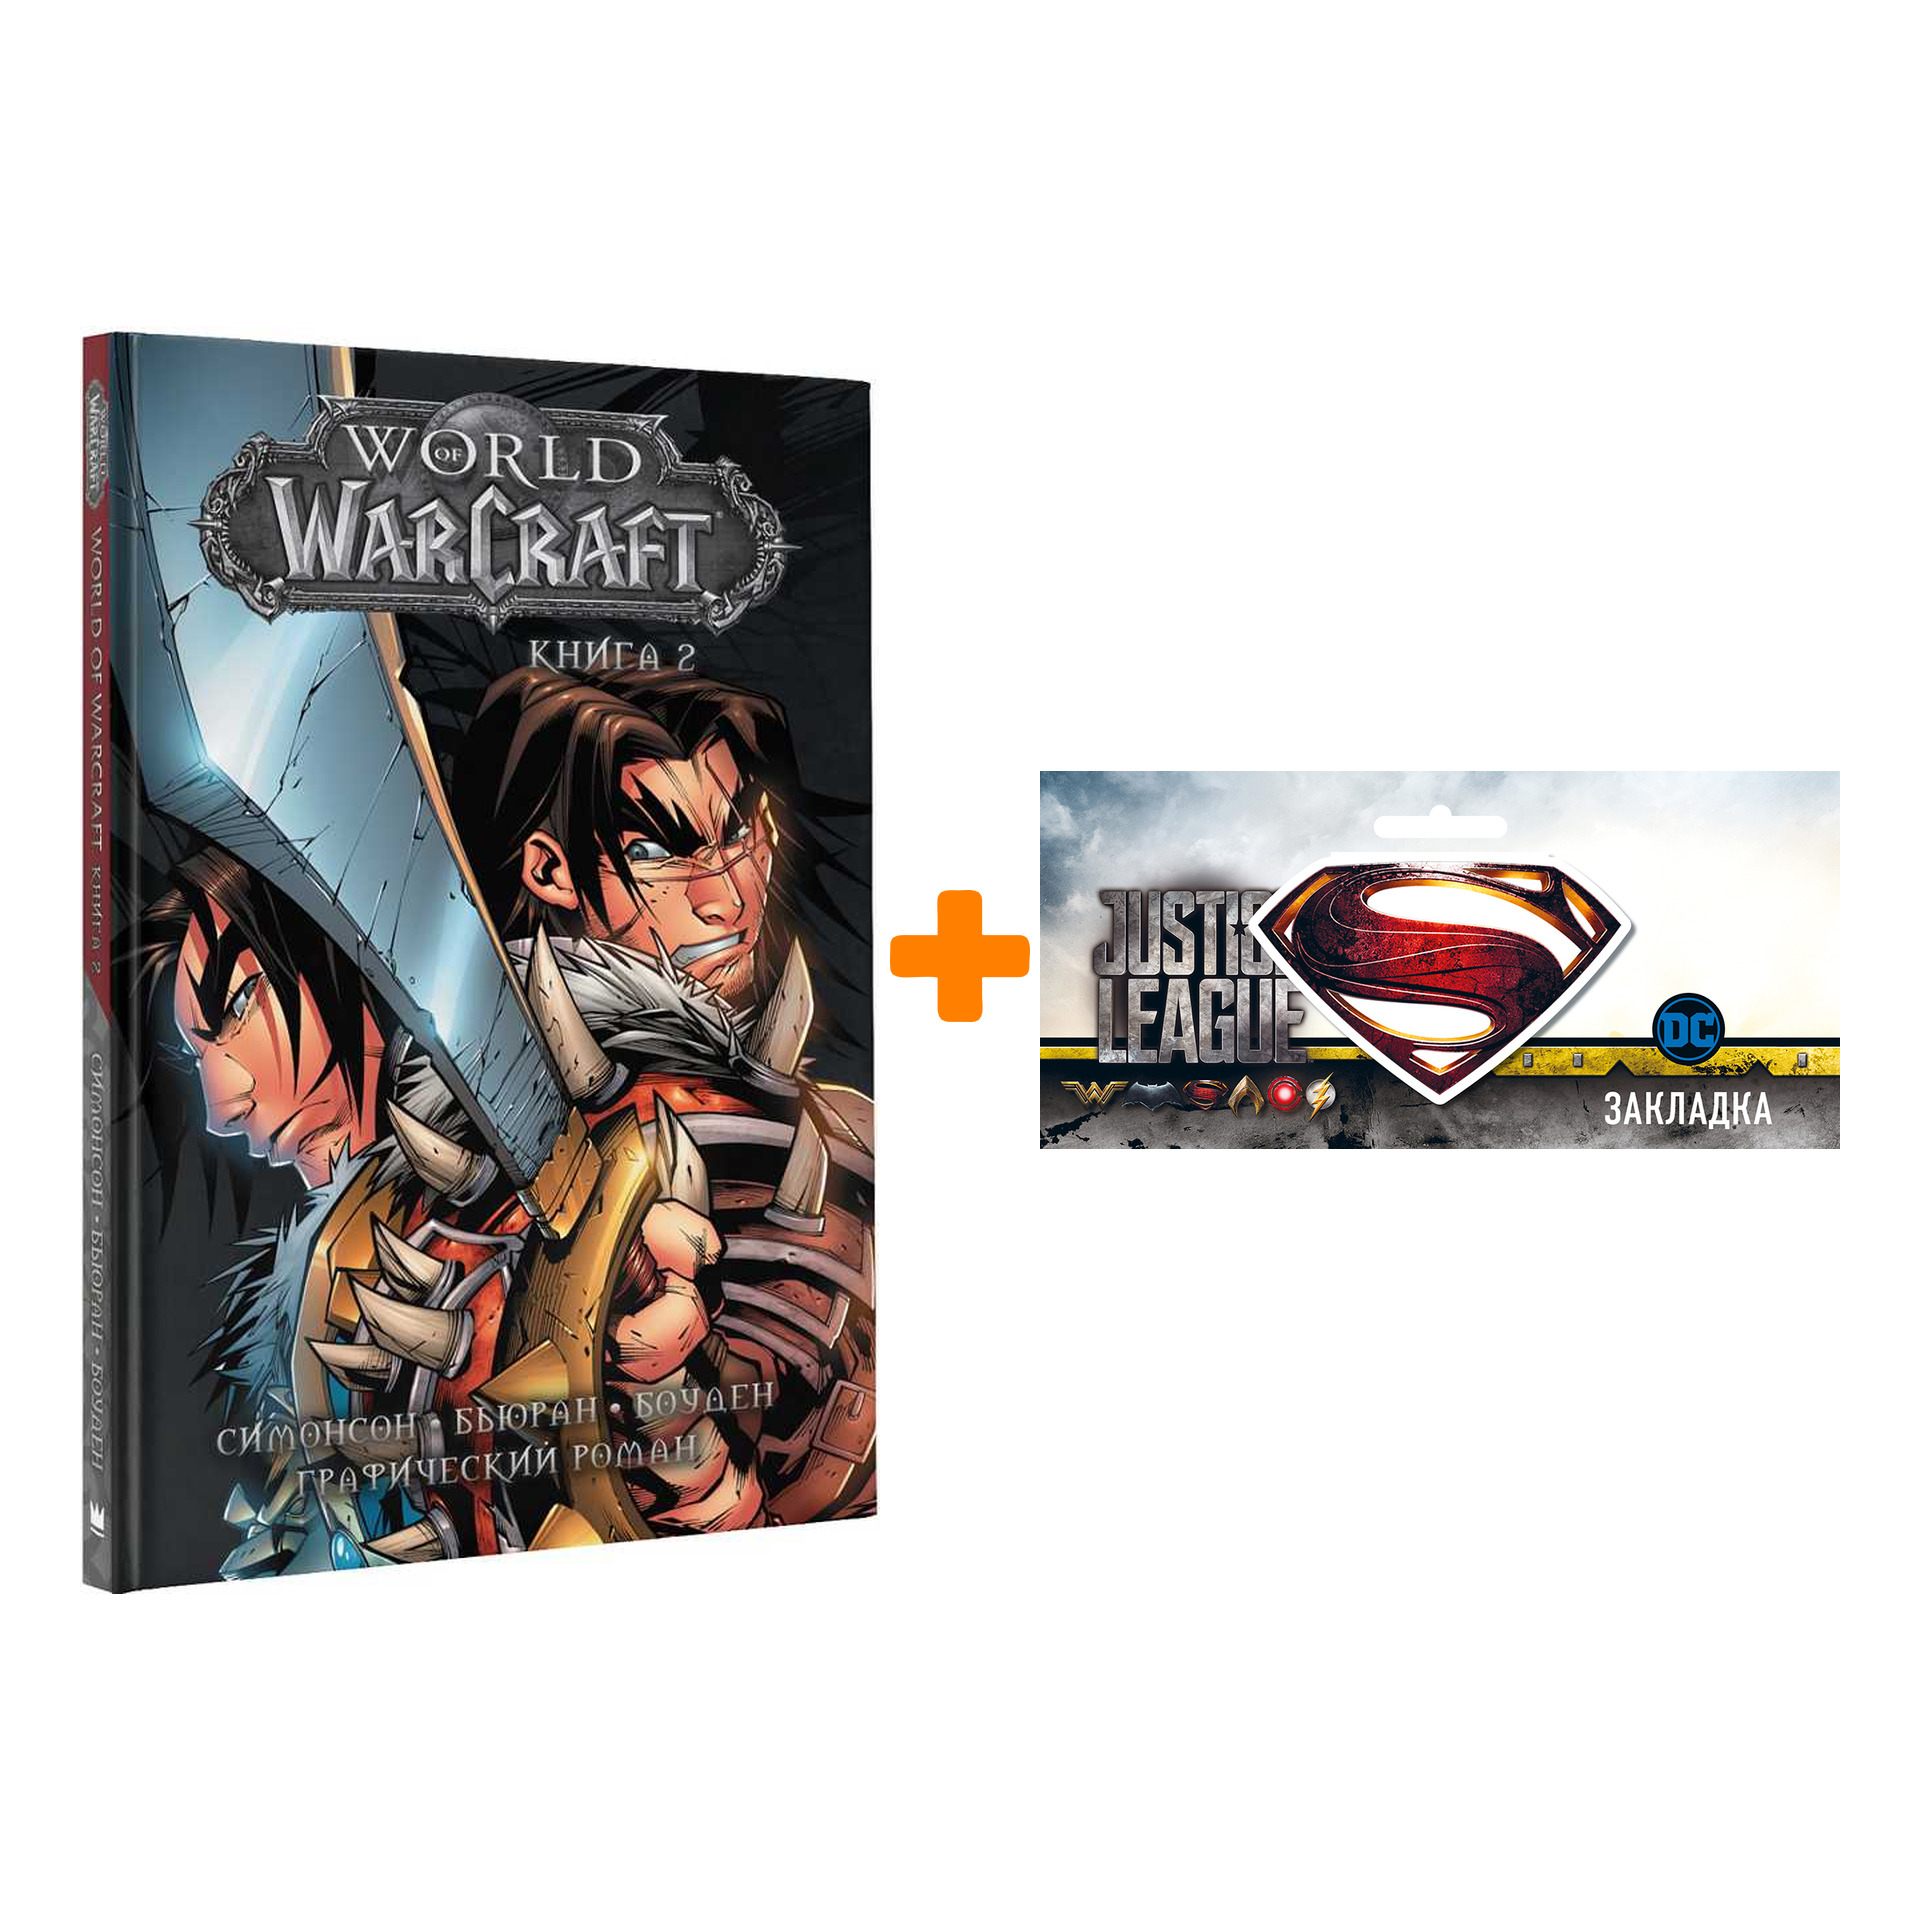 Набор Комикс World Of Warcraft Книга 2 + Закладка DC Justice League Superman магнитная